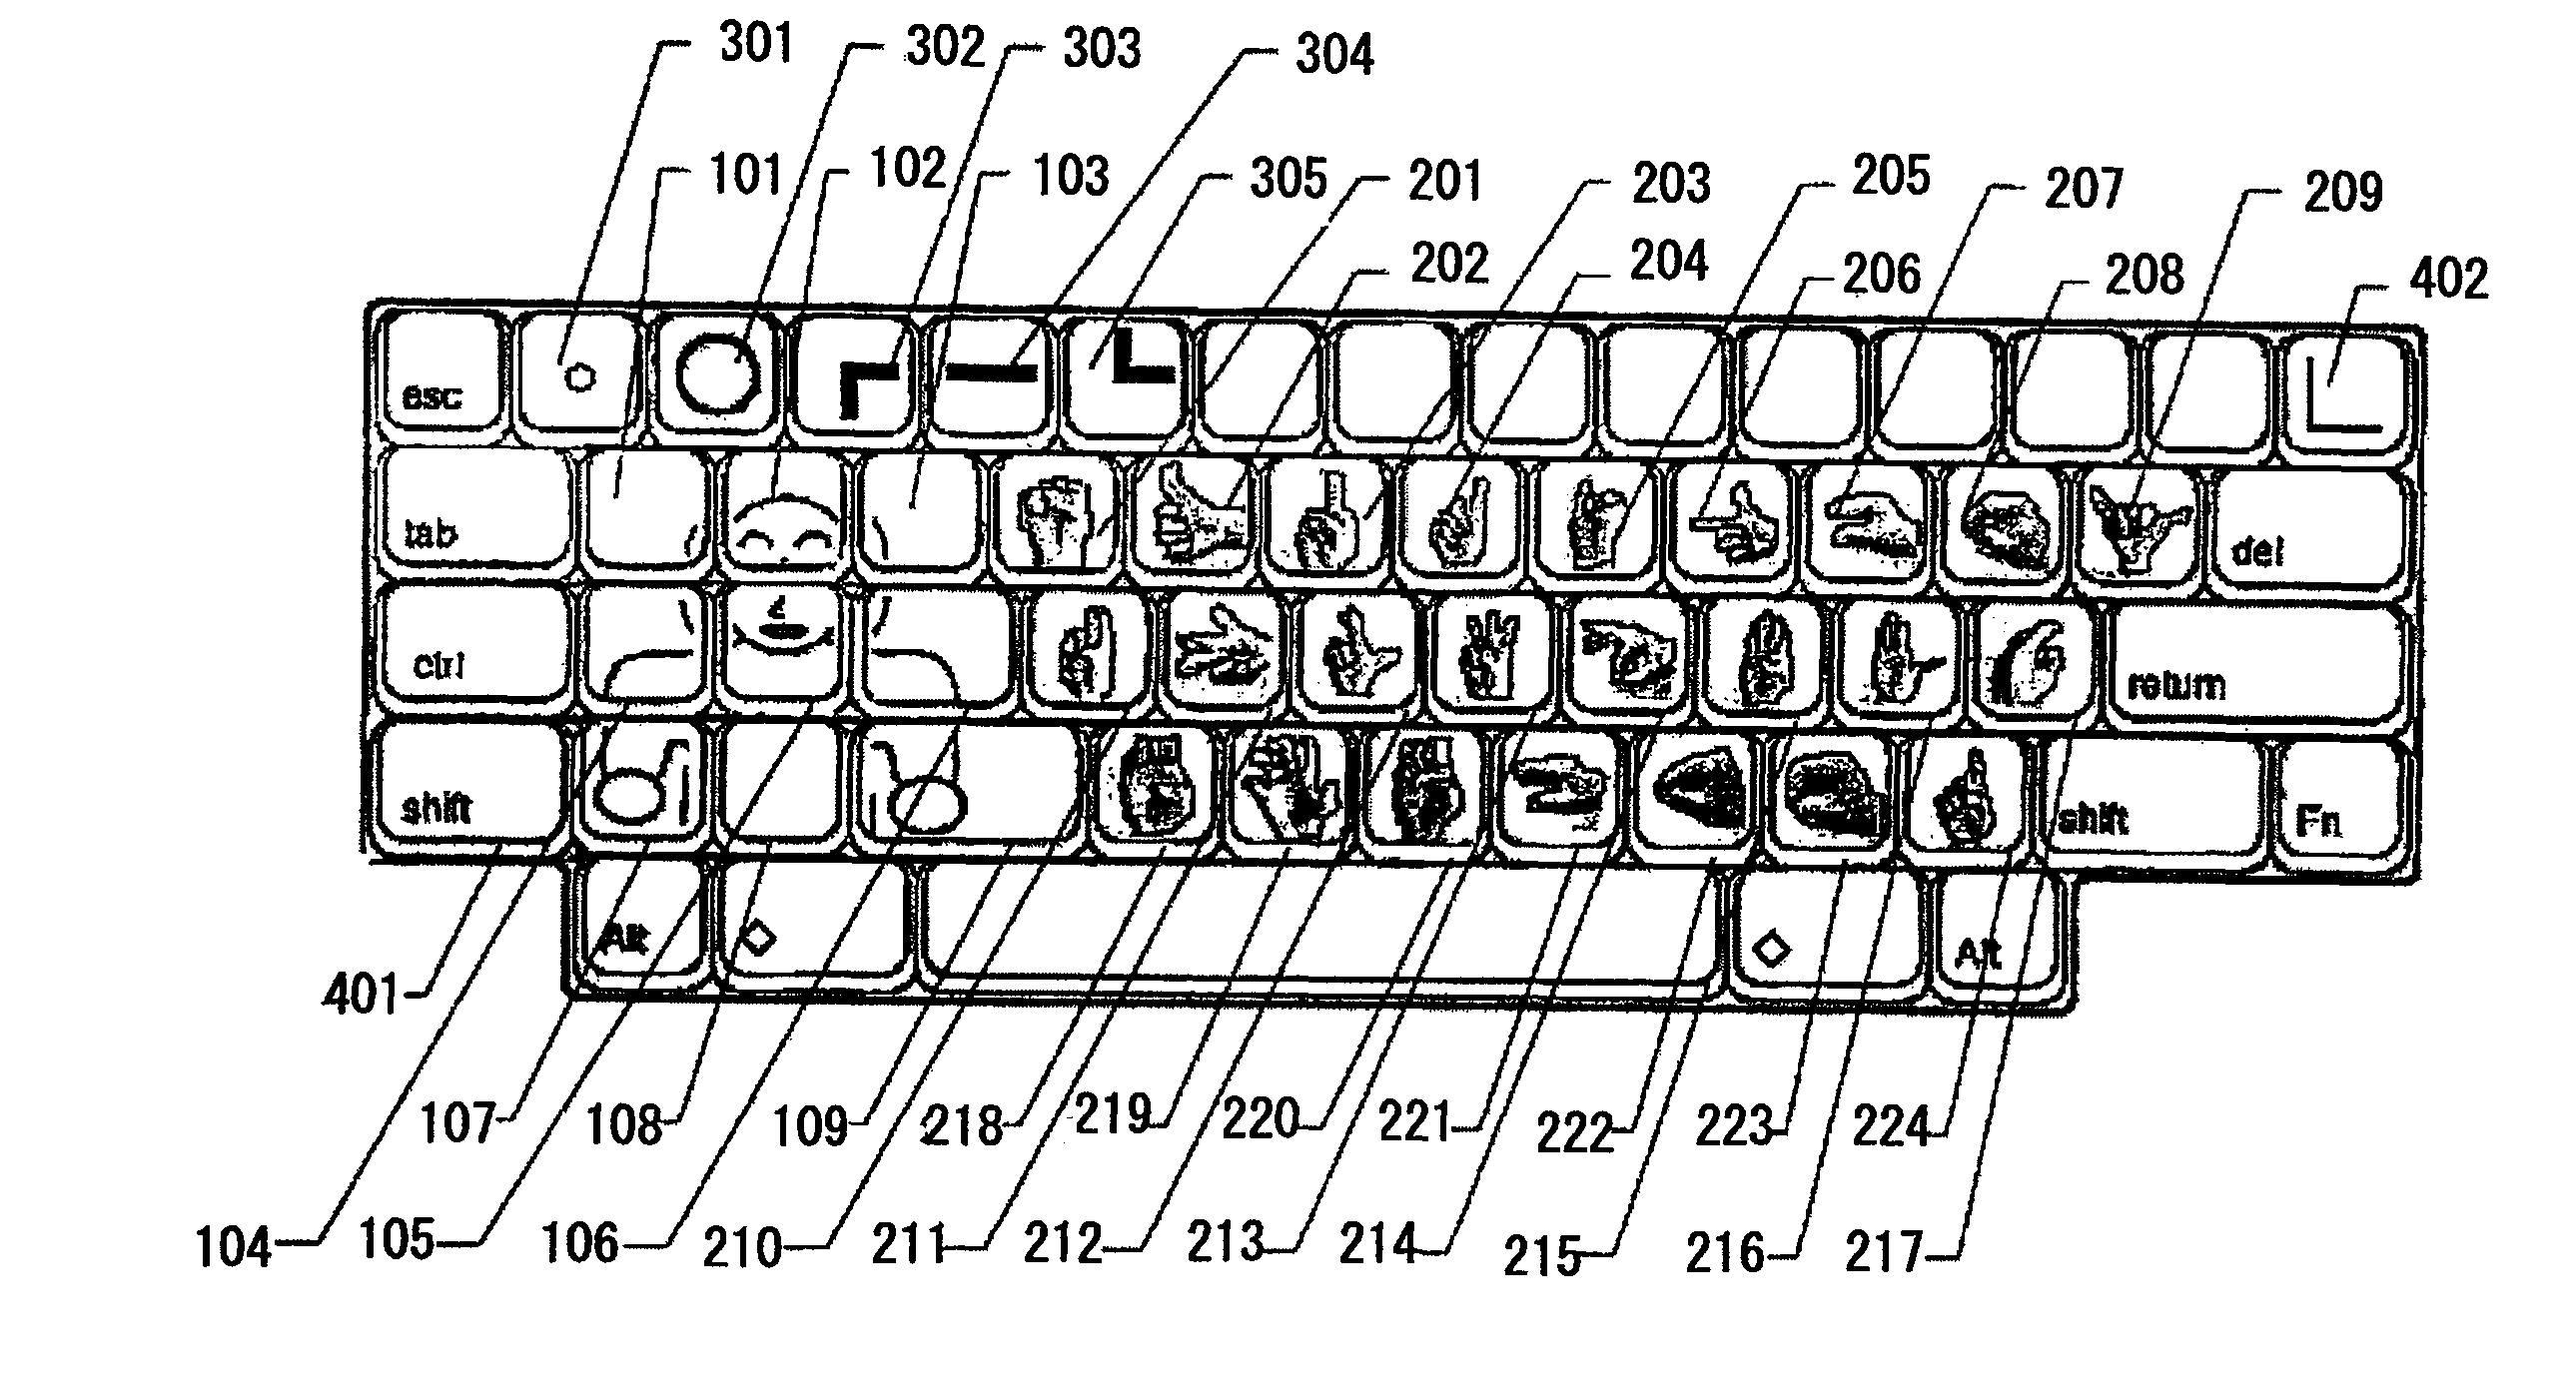 Sign language keyboard and sign language searching apparatus using the same